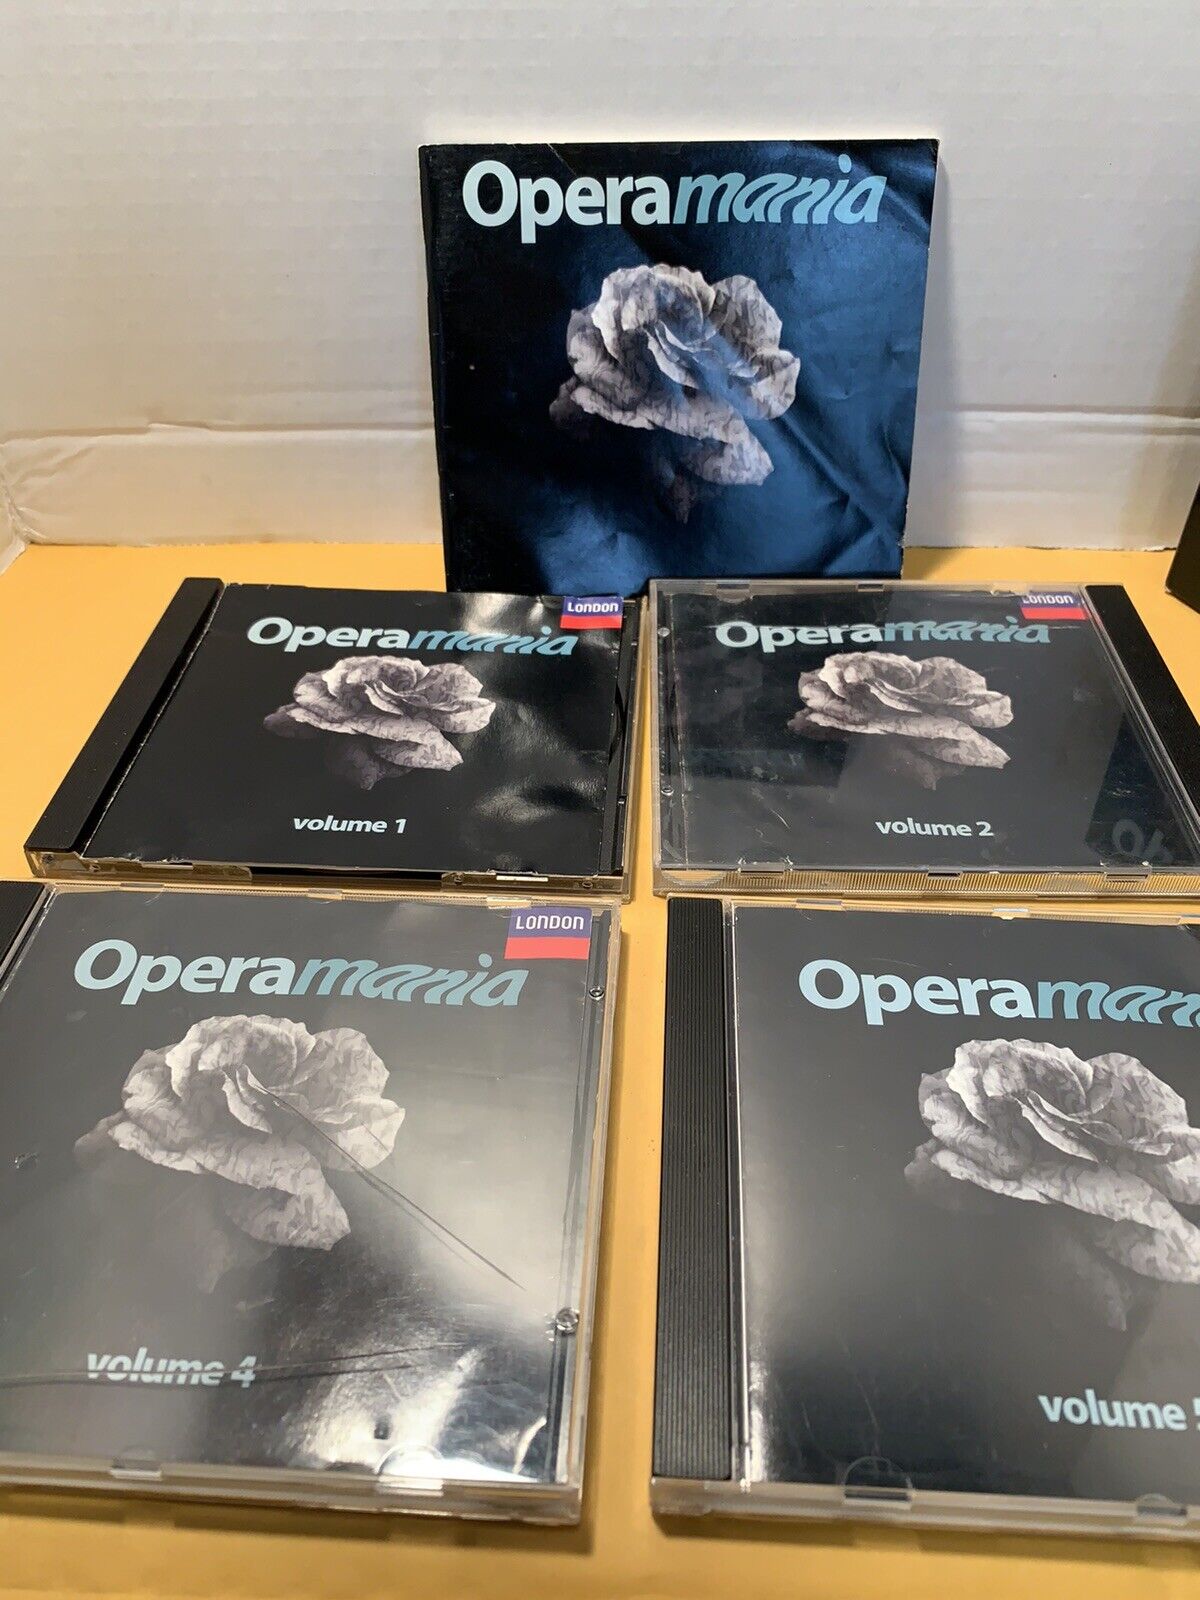 Operamania by Various Artists (4 CD Box Set, London)